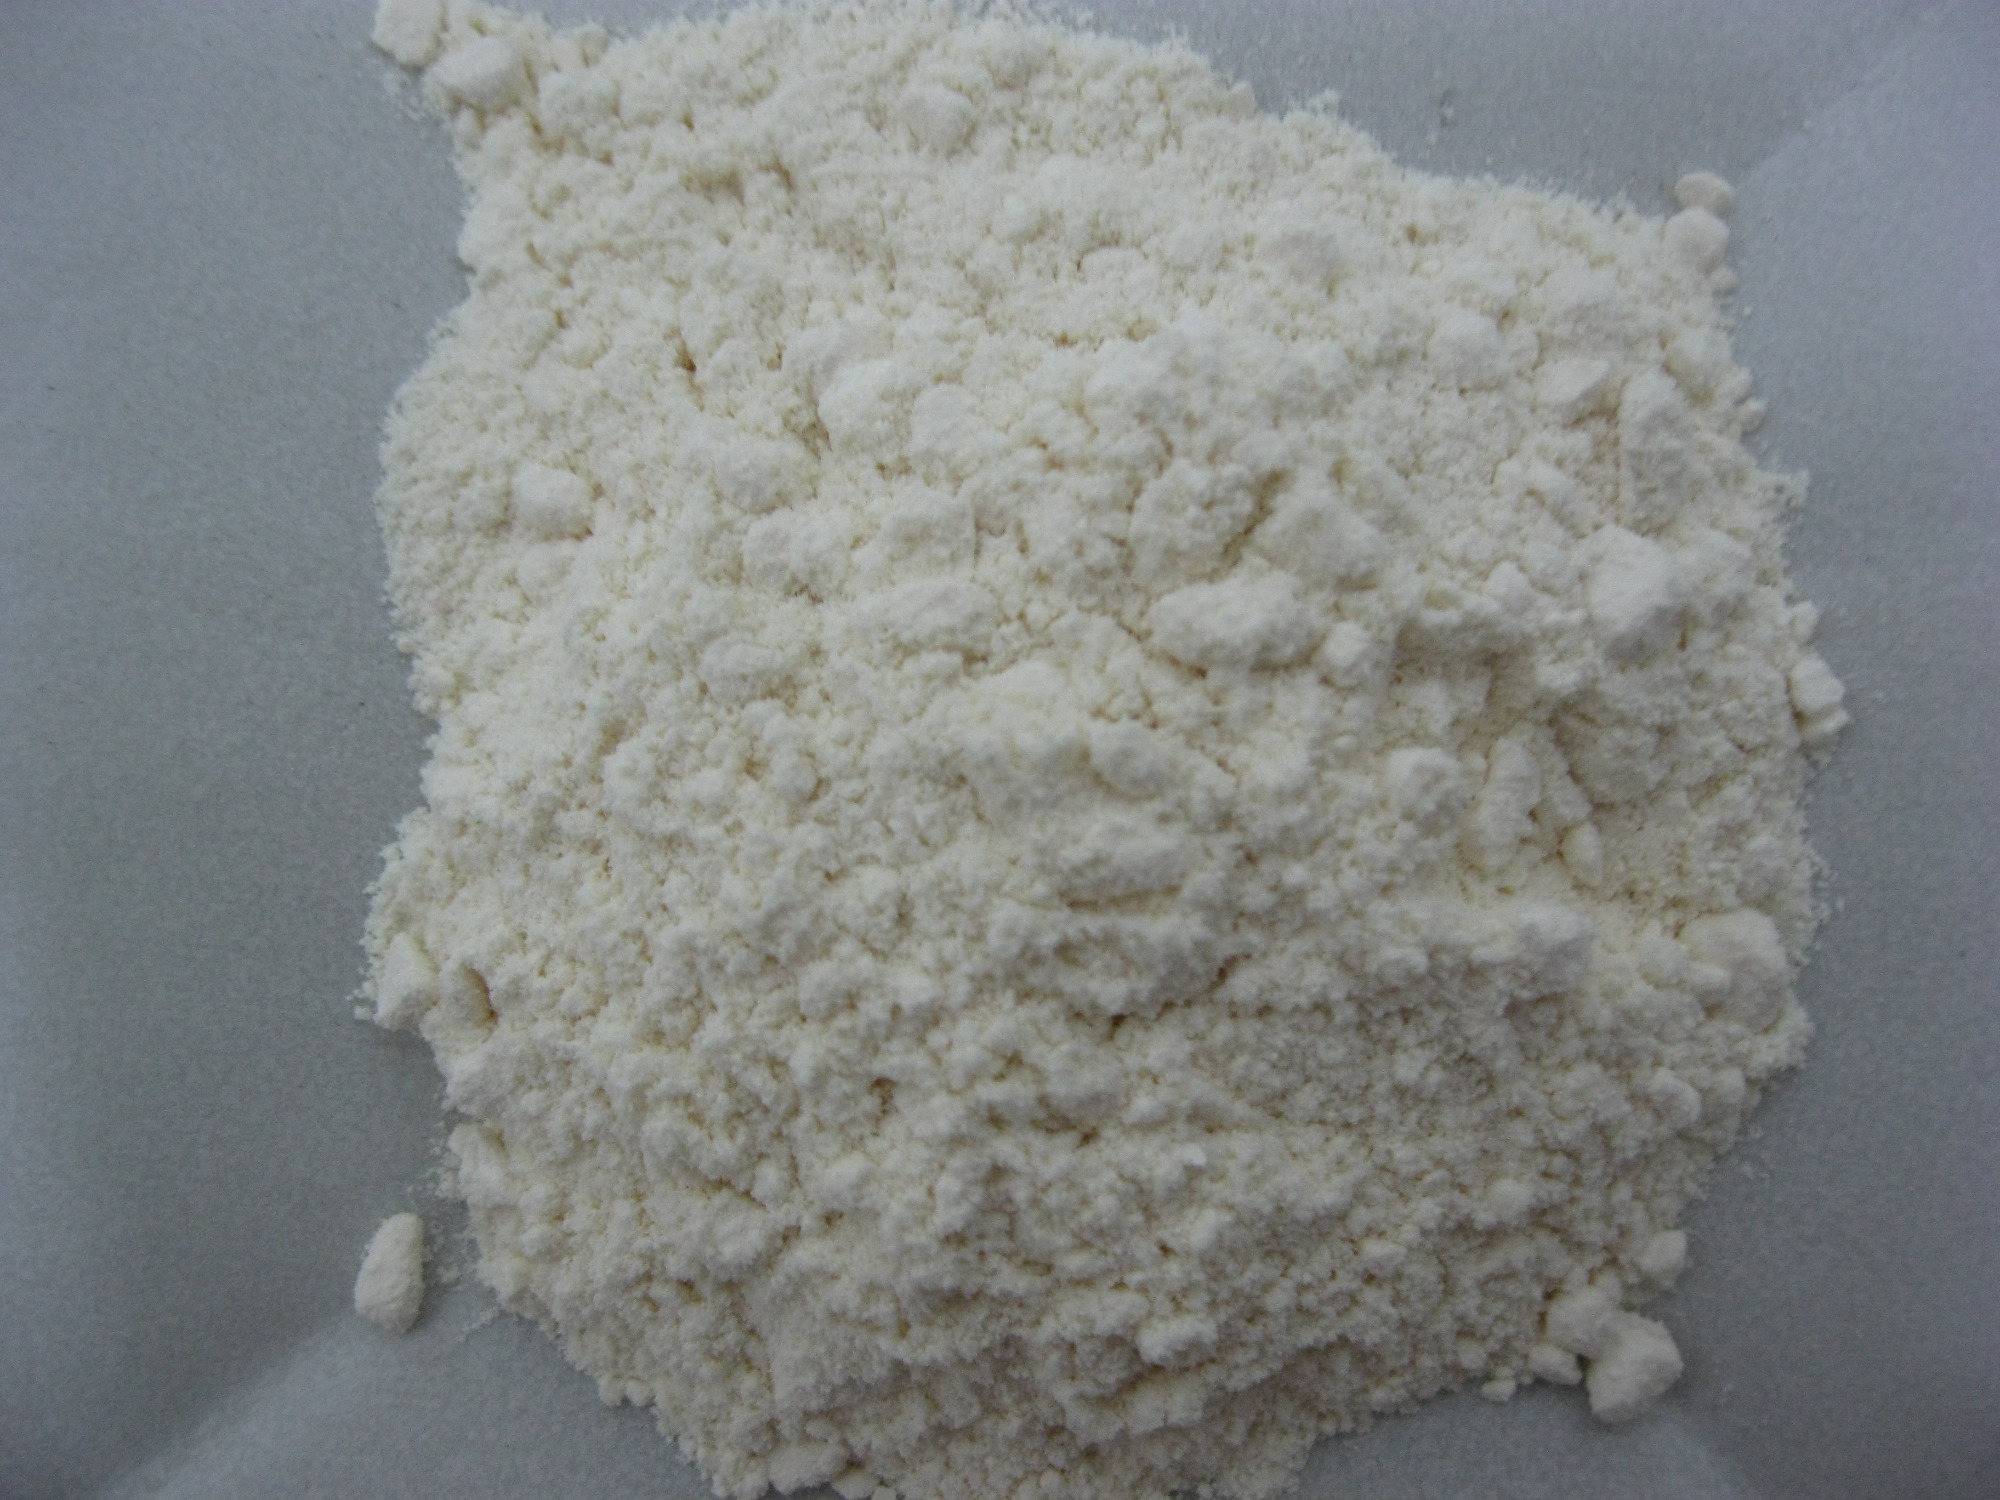 Factory price Organic 1,10-Phenanthroline CAS 66-71-7 in stock